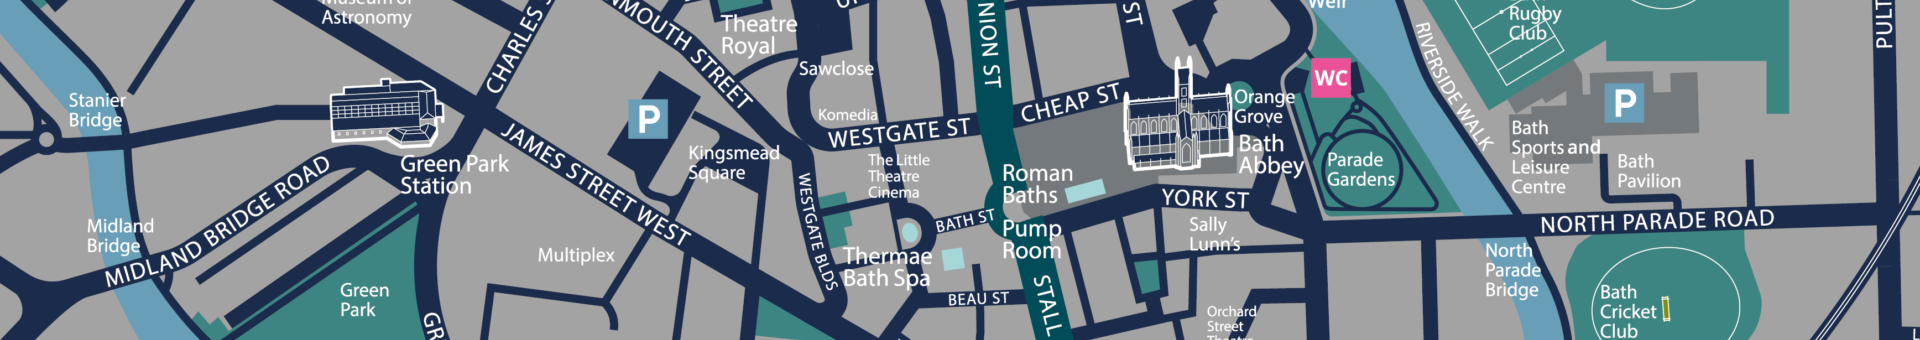 Map of Bath, UK